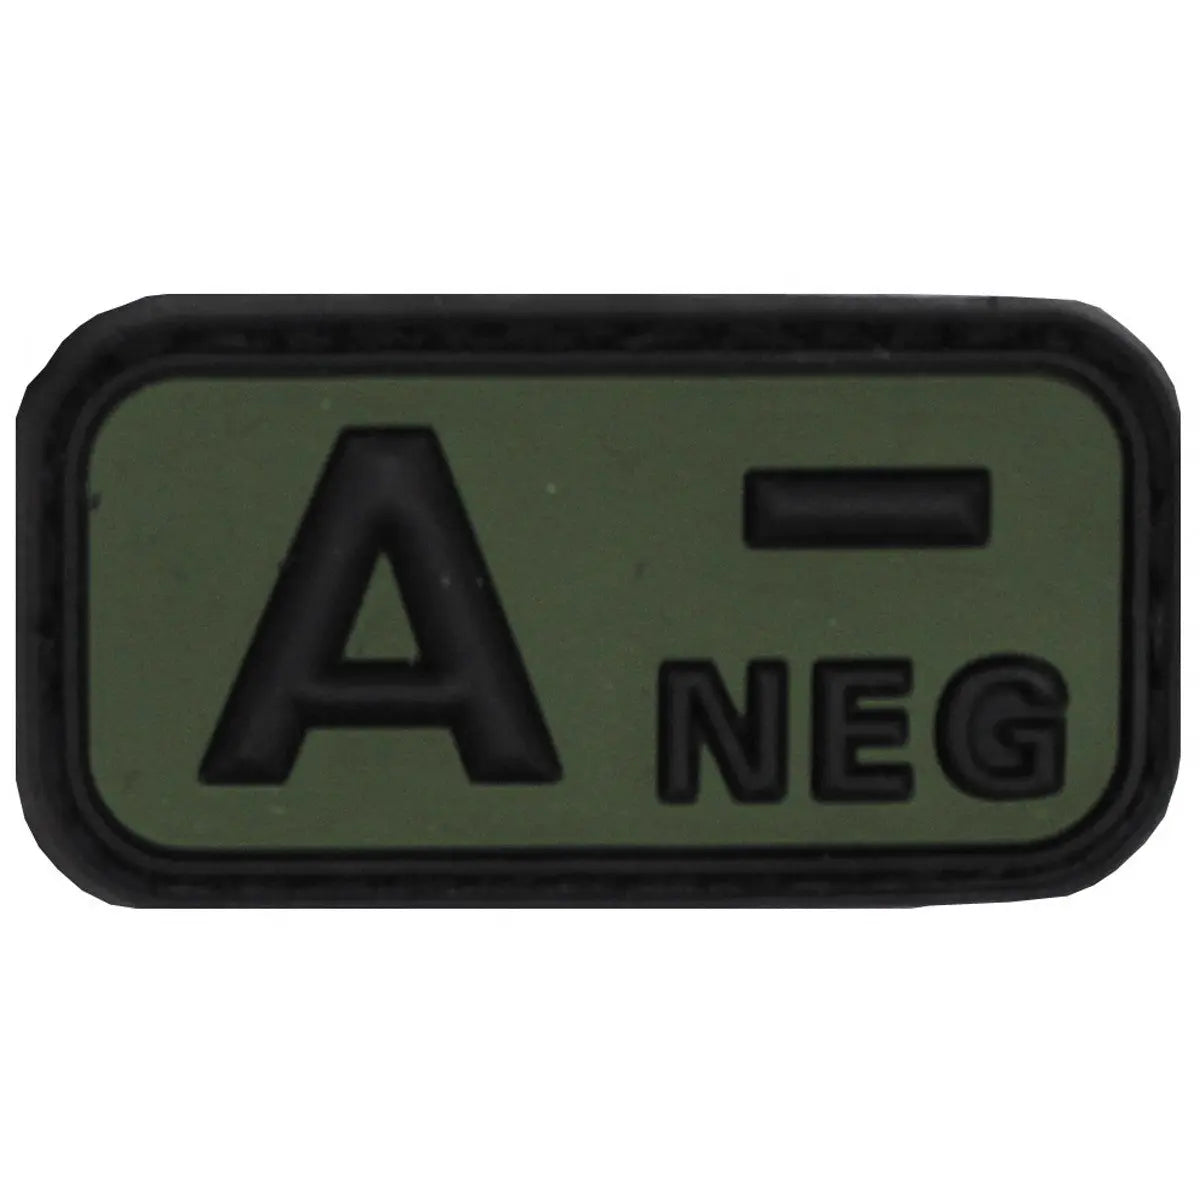 Velcro Patch, black-OD green, blood group "A NEG", 3D NSO Gear